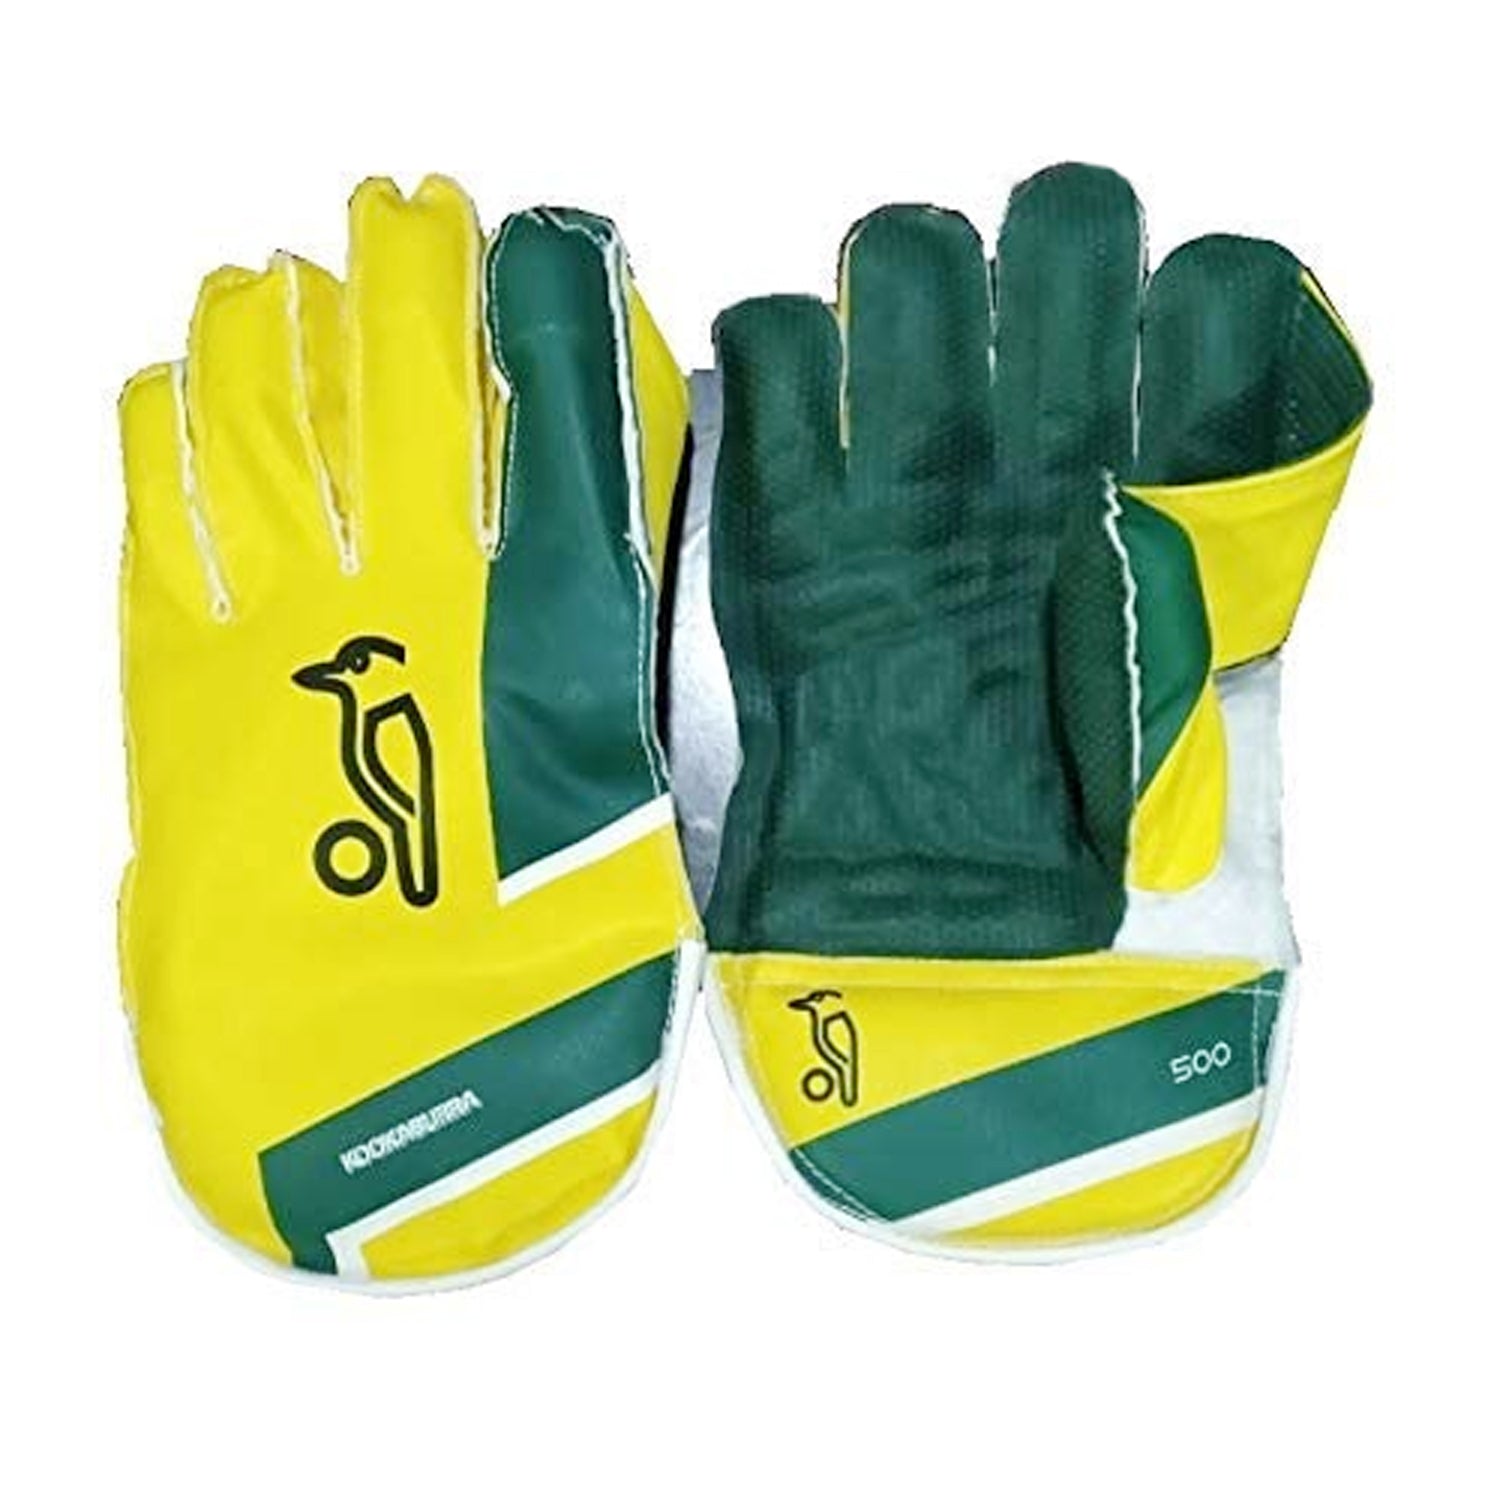 Kookaburra Kahuna Pro 500 Wicket Keeping Gloves - Best Price online Prokicksports.com